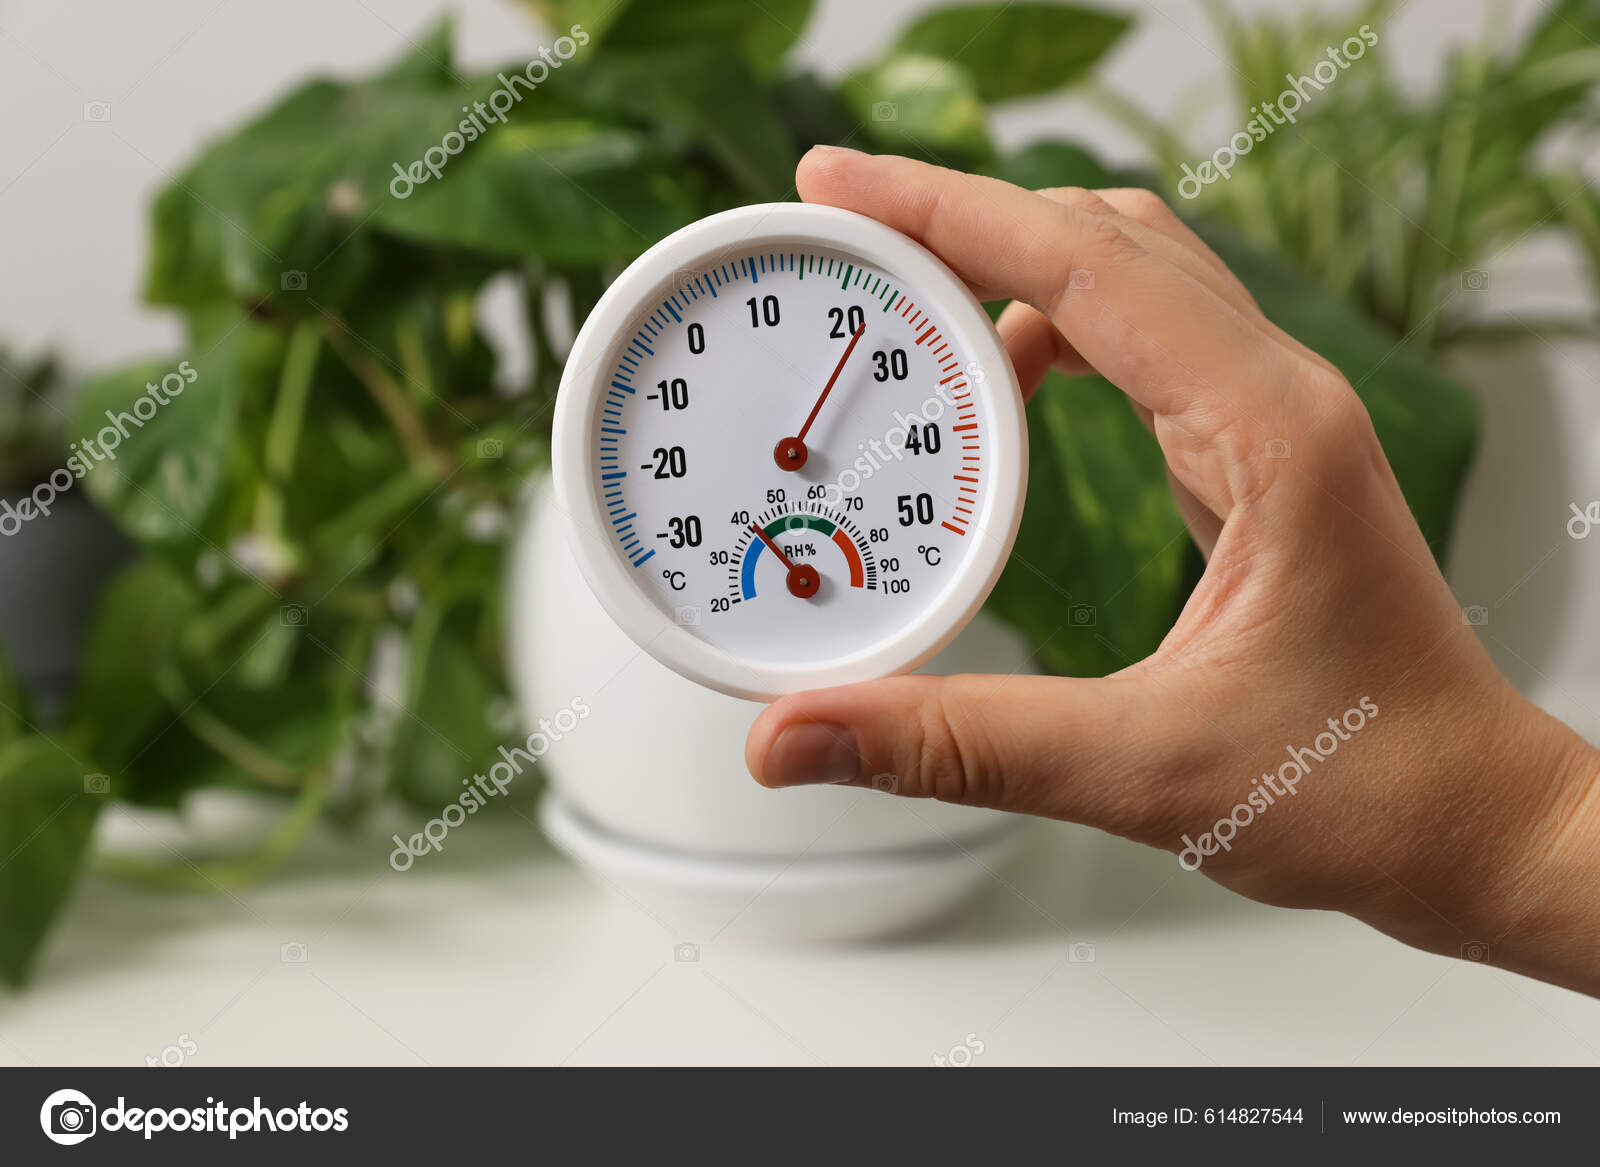 https://st.depositphotos.com/16122460/61482/i/1600/depositphotos_614827544-stock-photo-woman-holding-hygrometer-thermometer-blurred.jpg